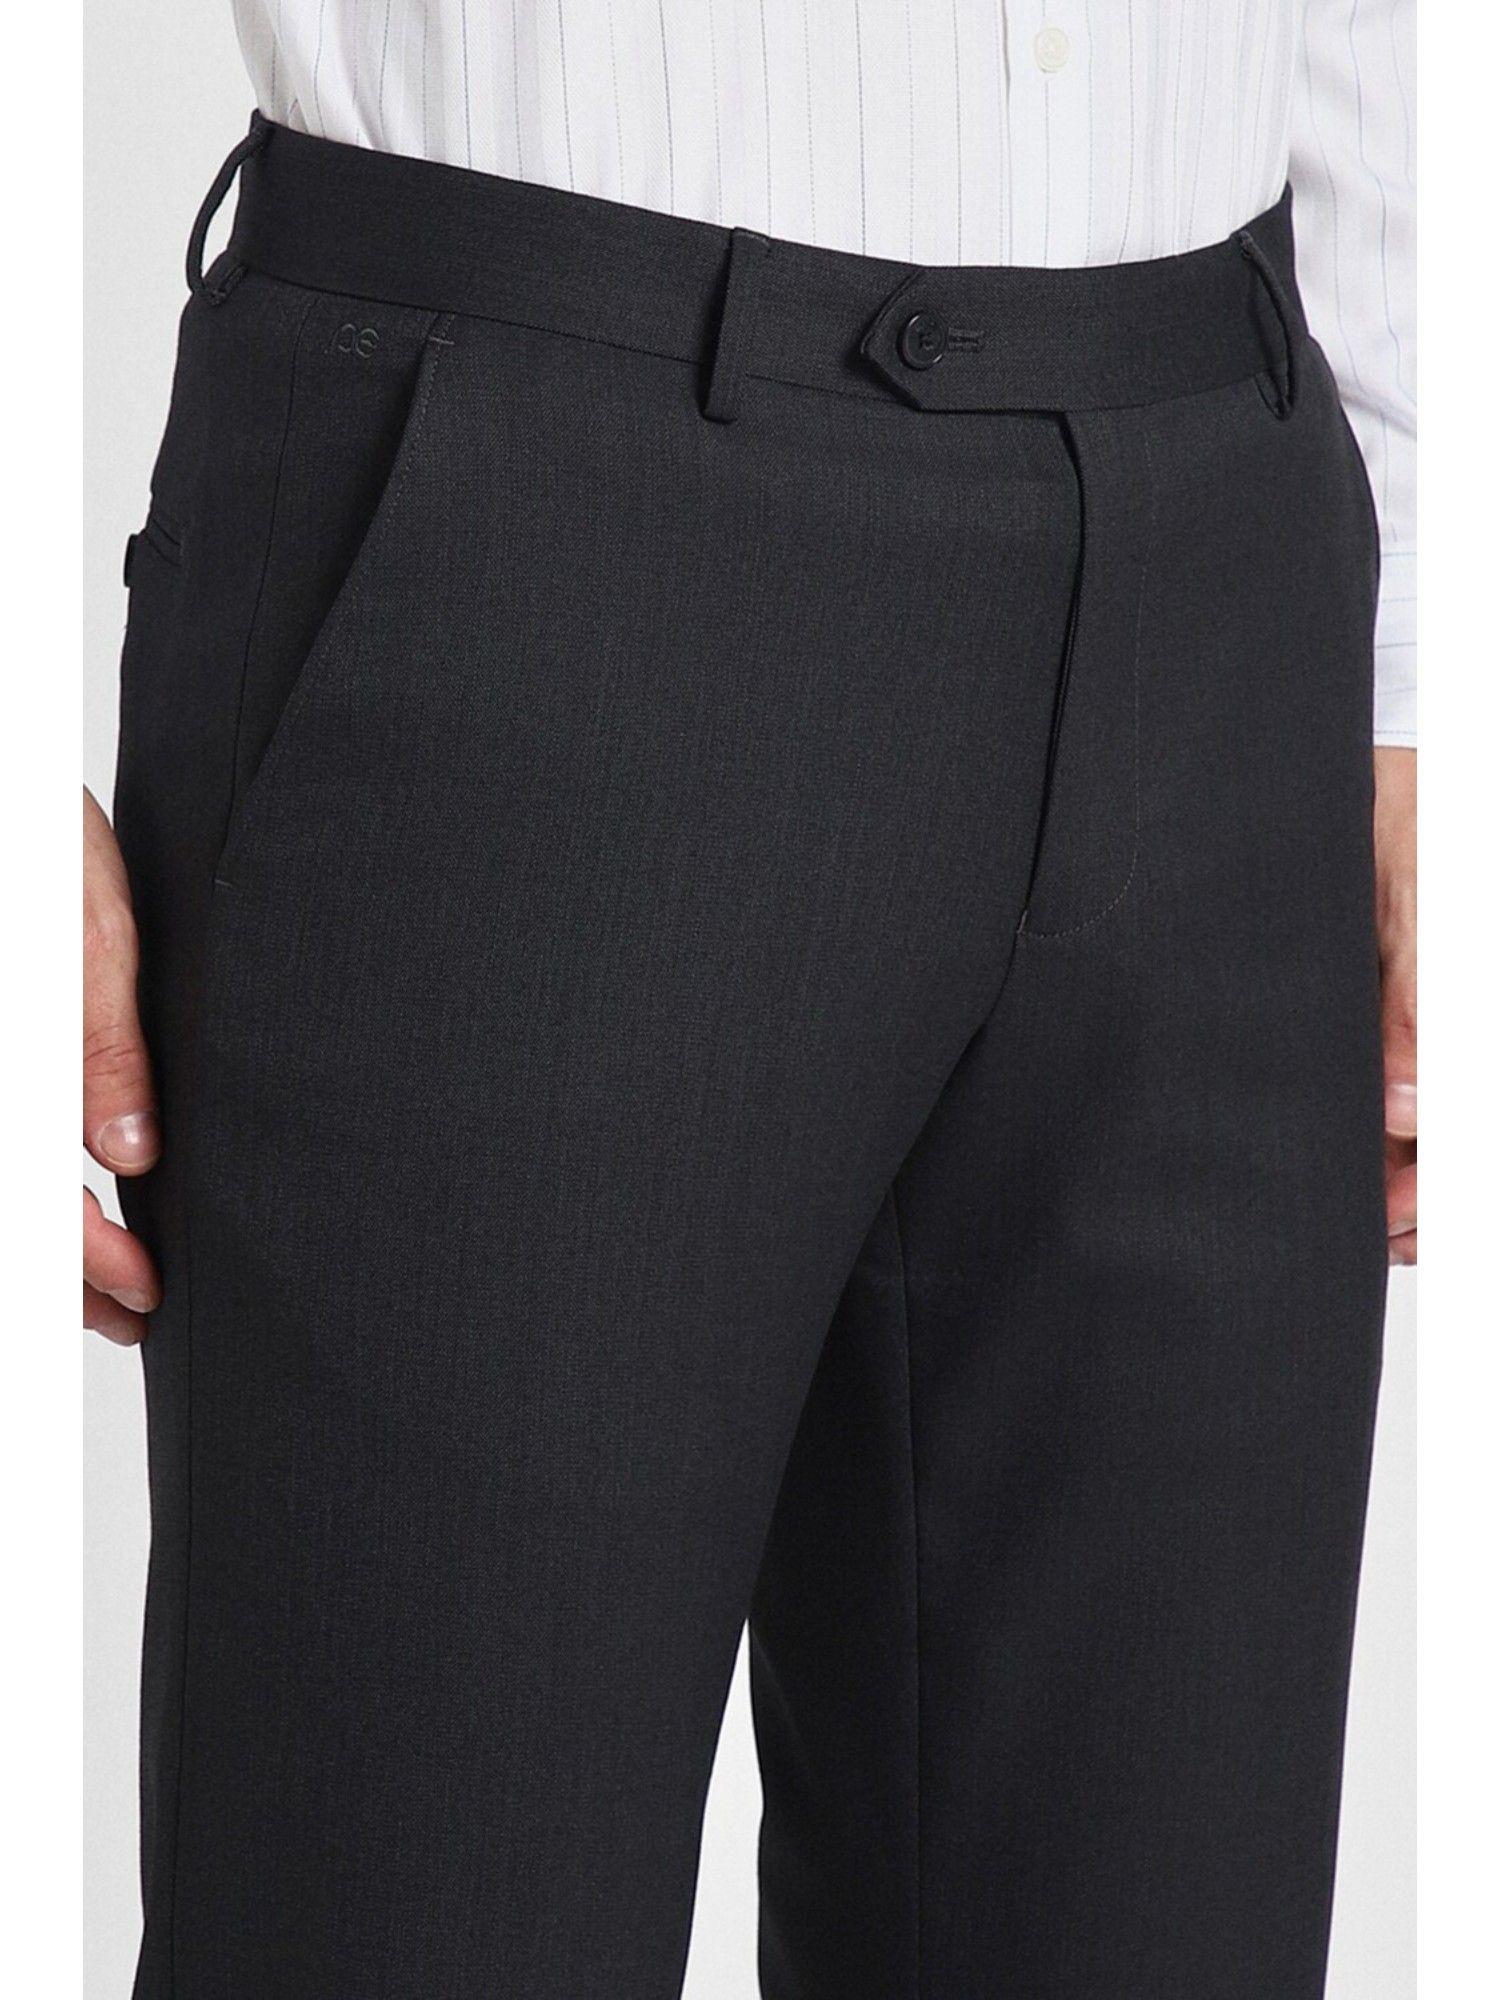 Buy Peter England Men's Regular Work Utility Pants  (PETFACTFD98290_Brown_82) at Amazon.in